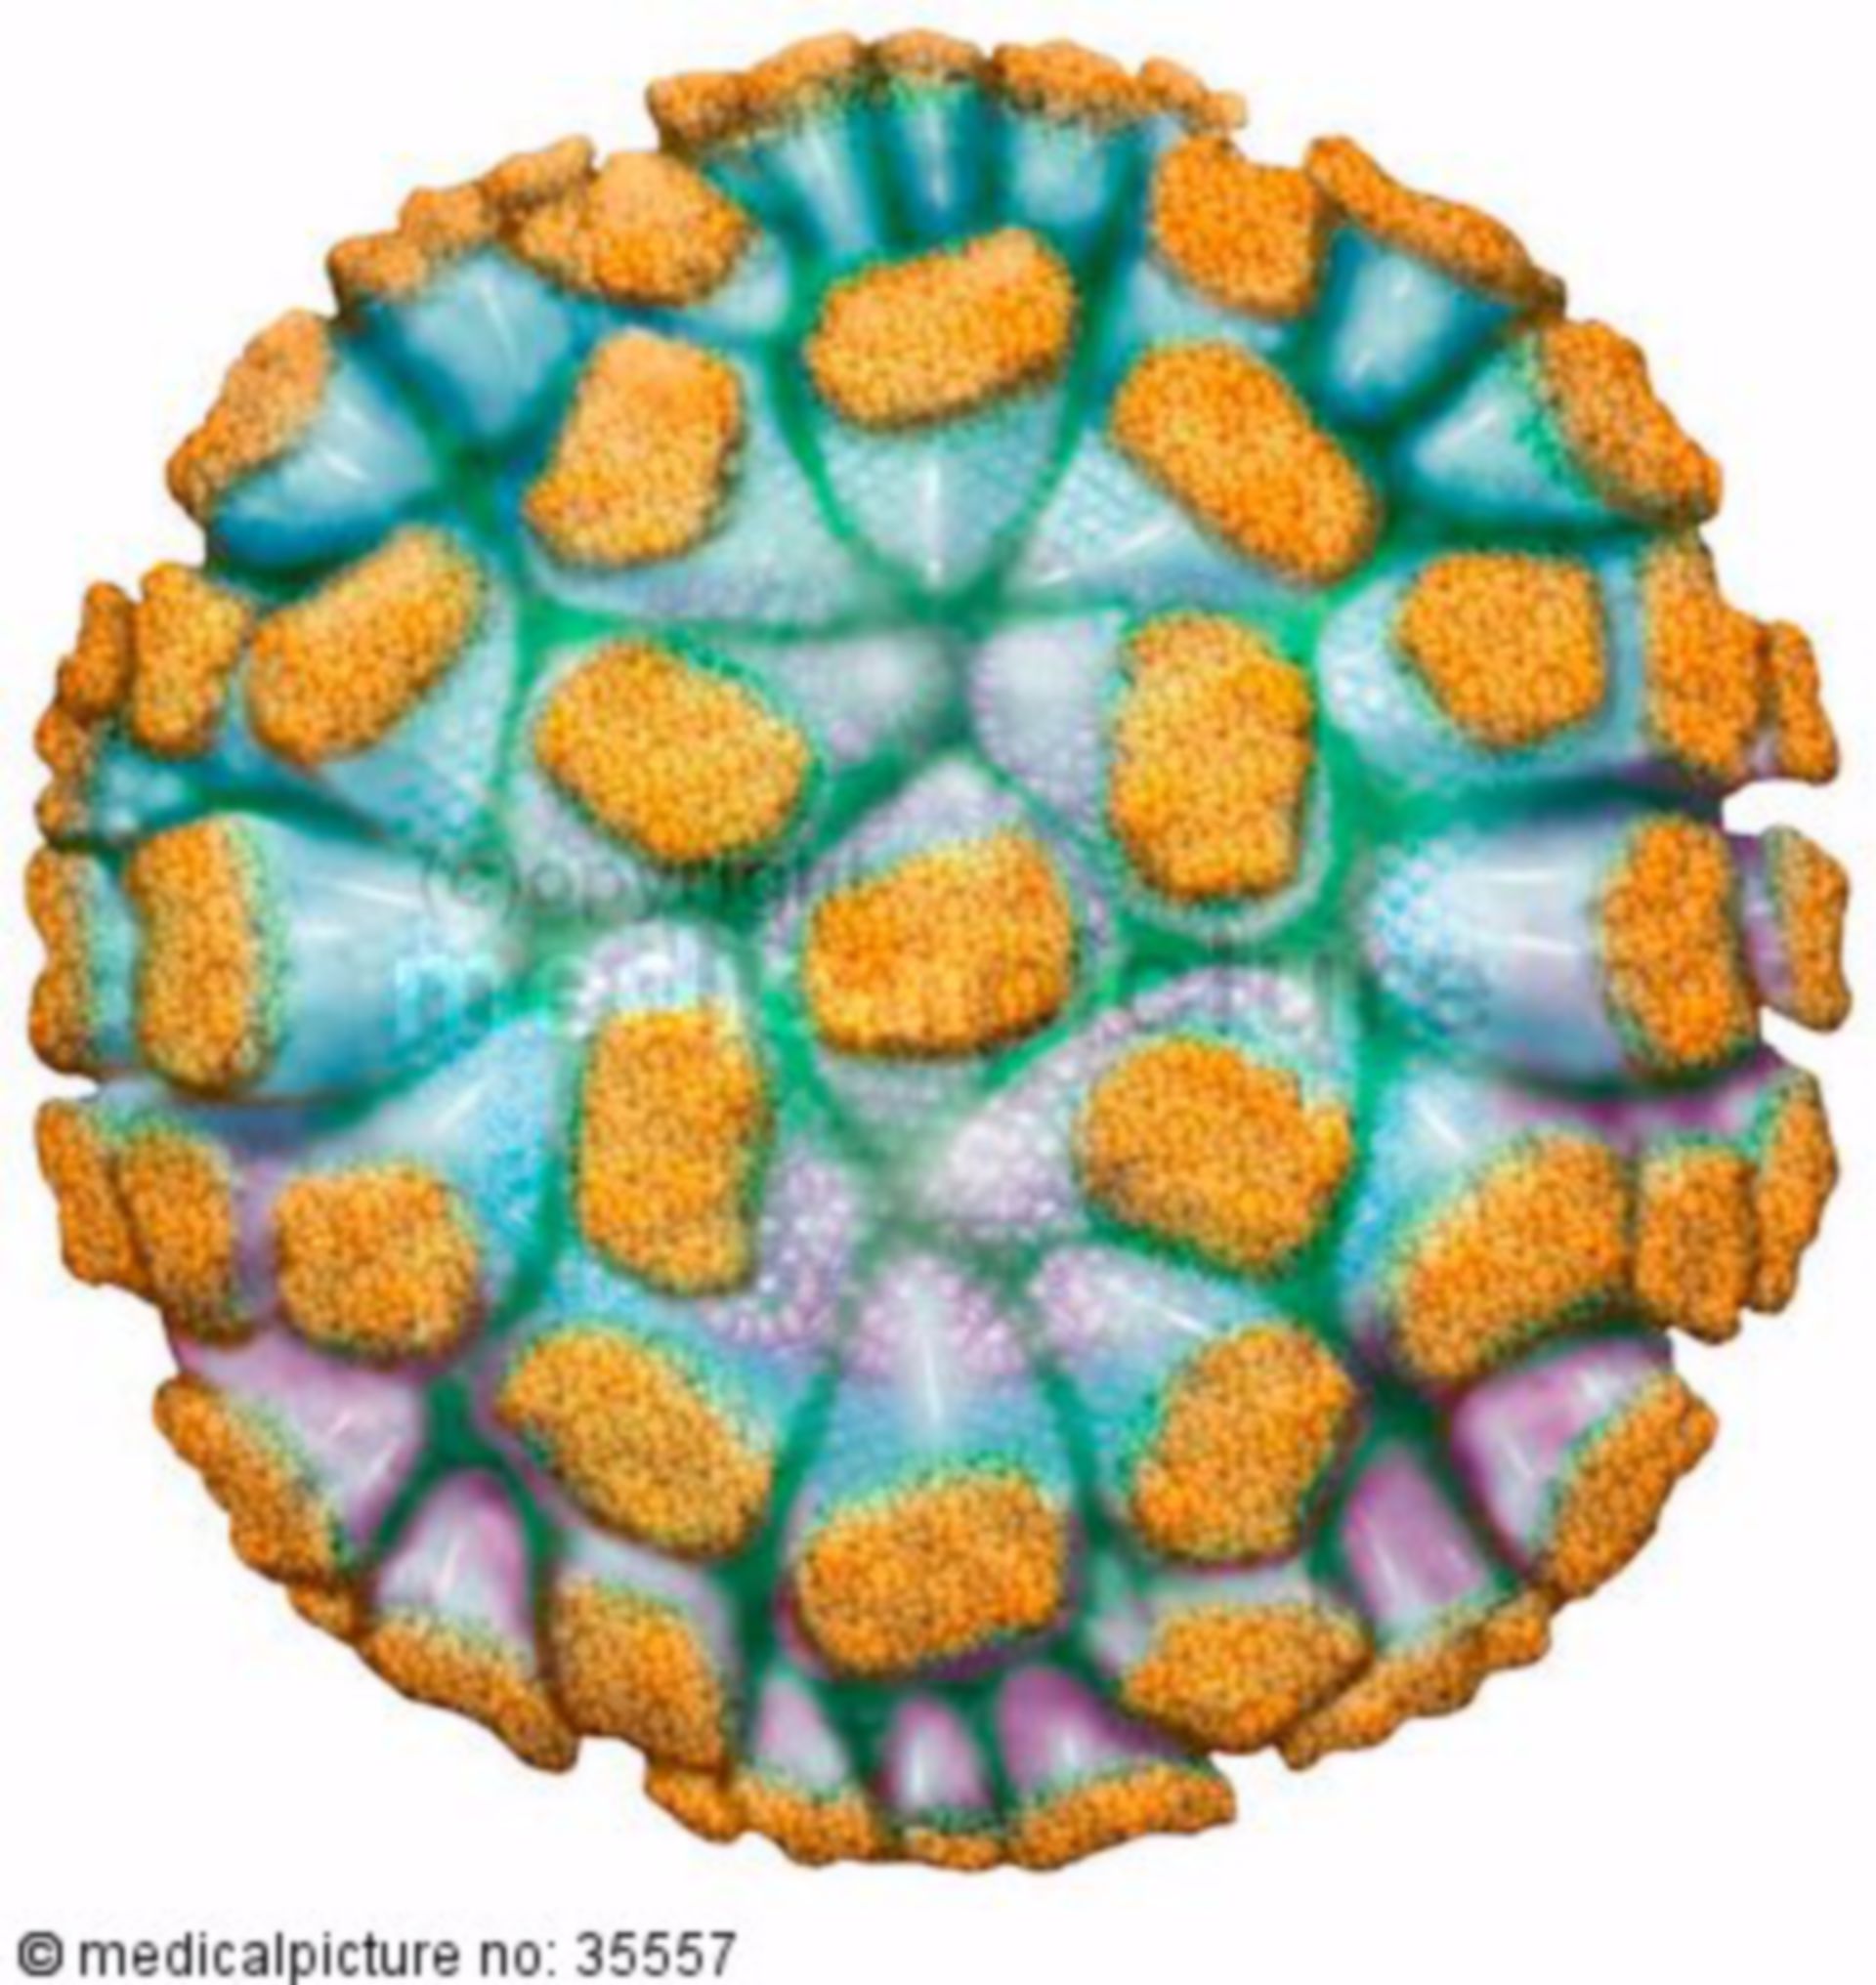  Norwalk Virus, Norovirus, Virenmodell 
